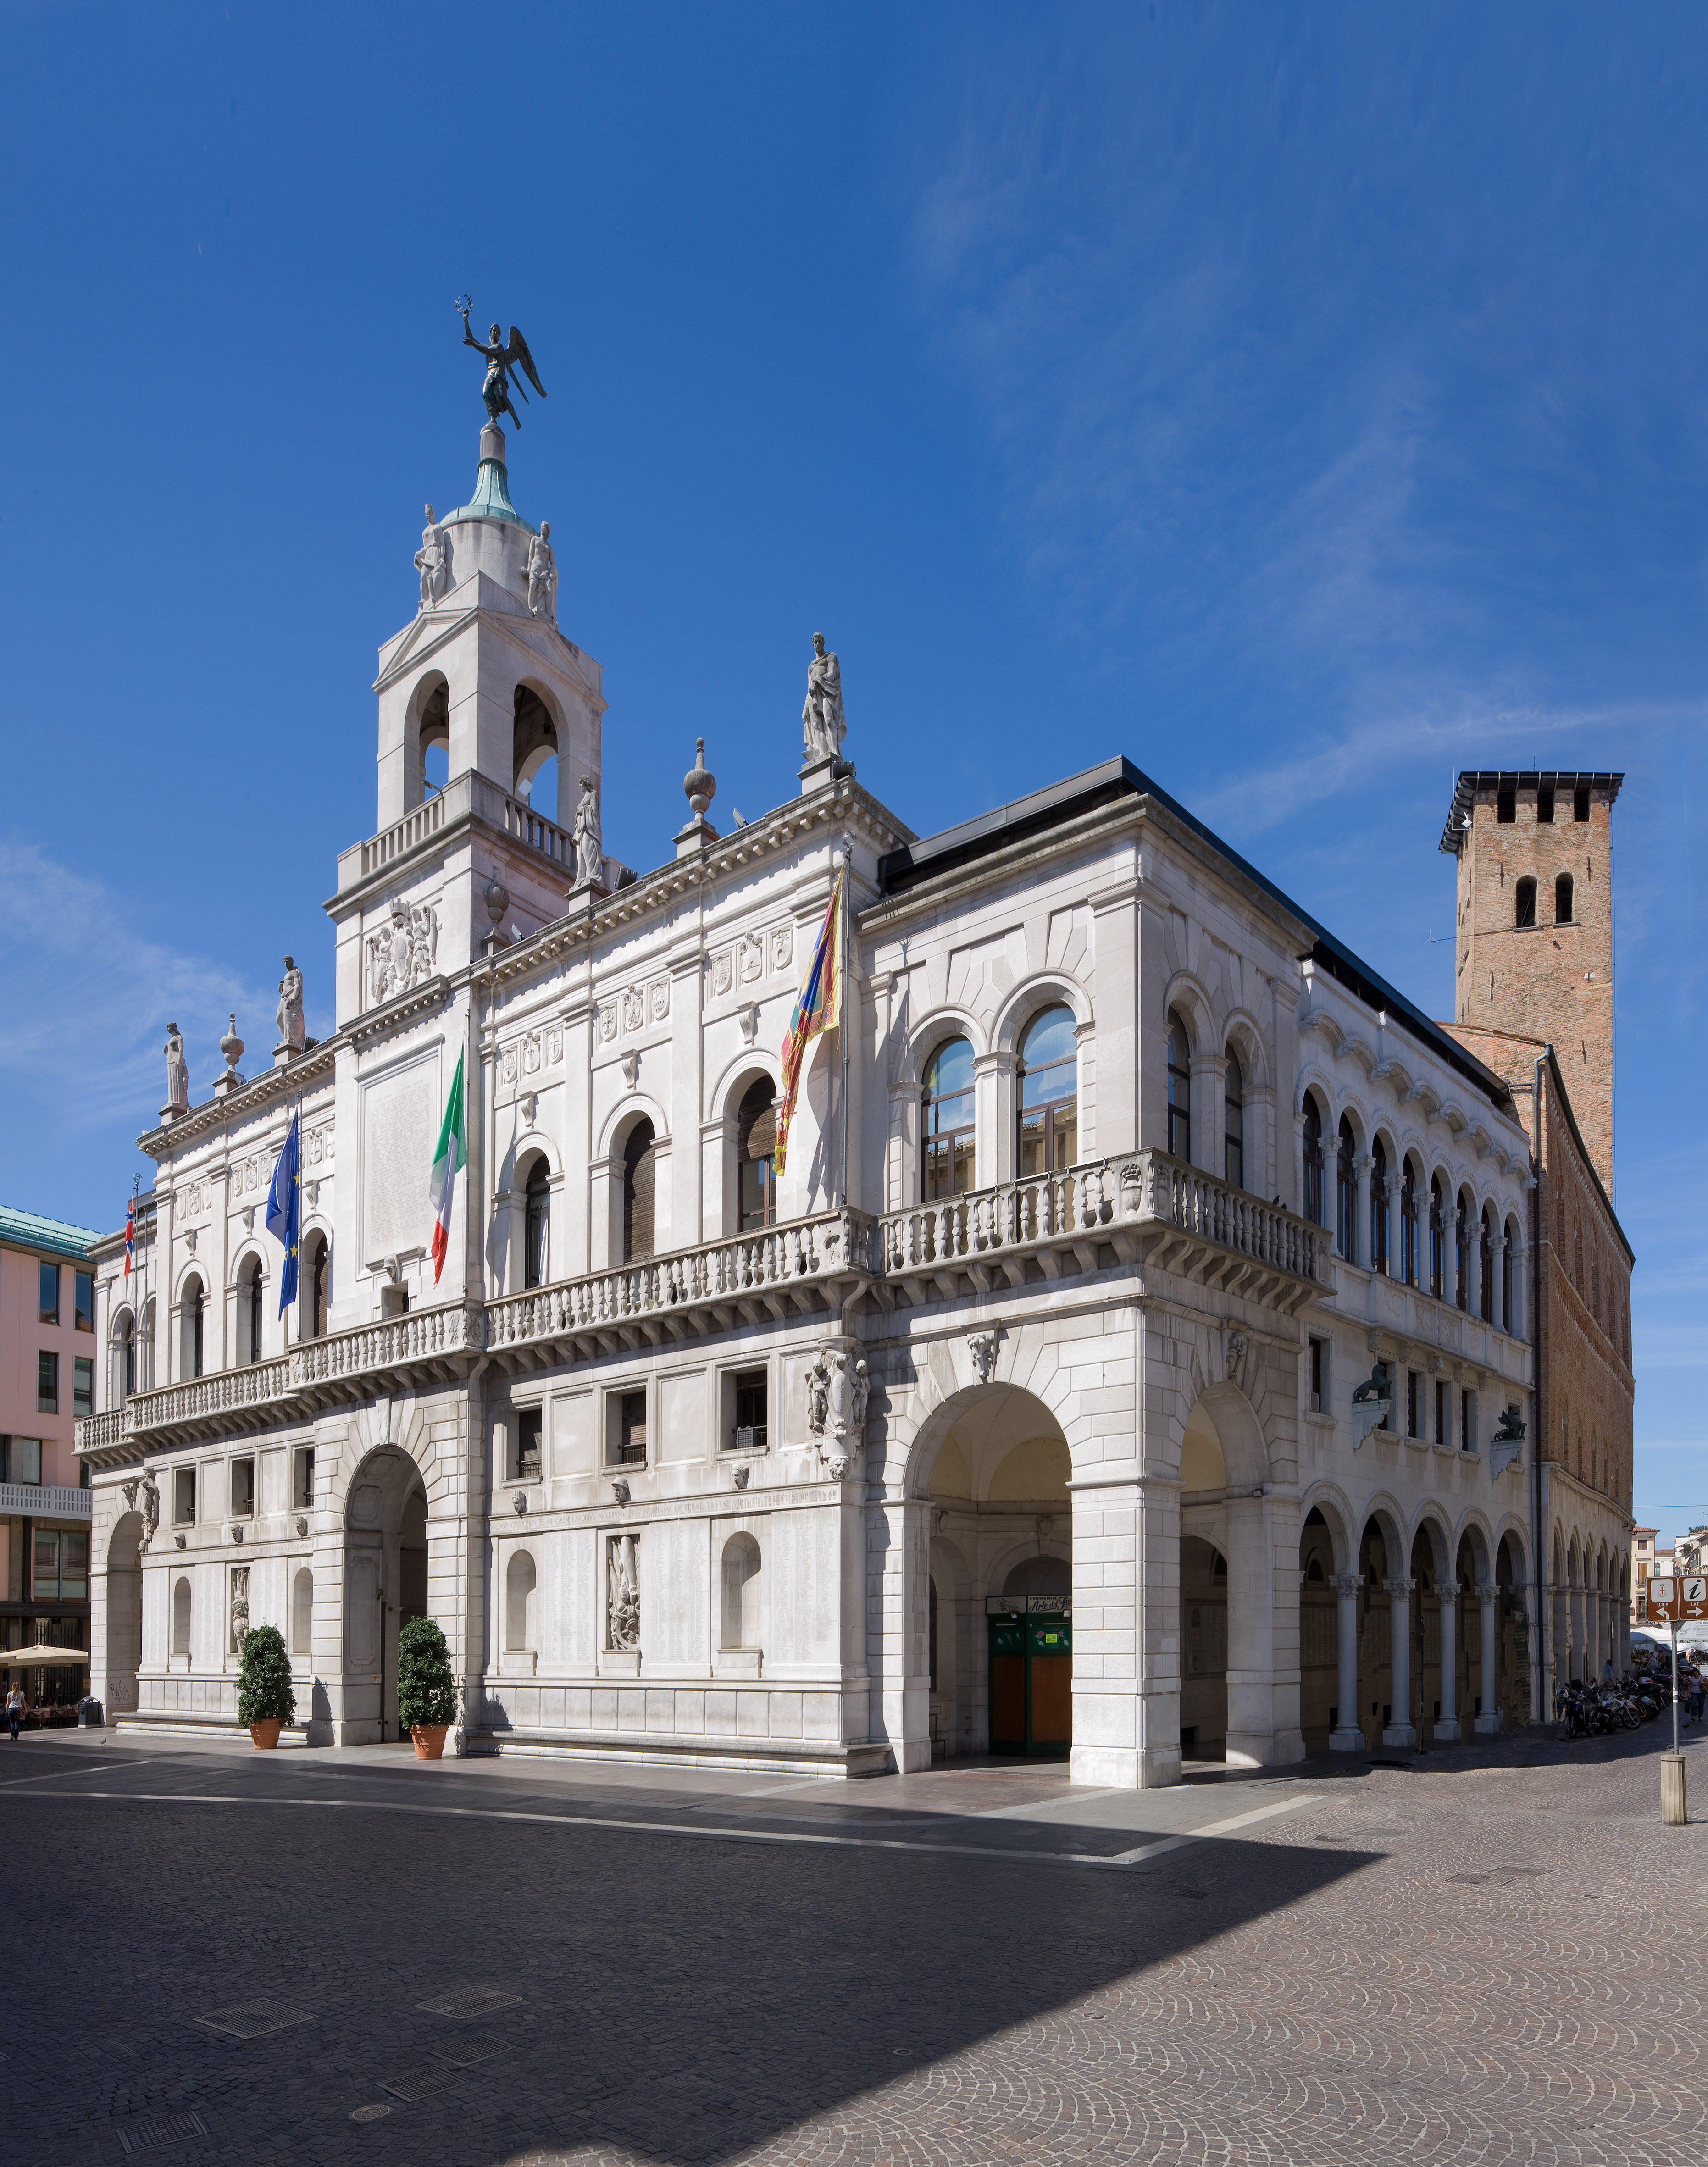 Palazzo-Moroni-municipio2